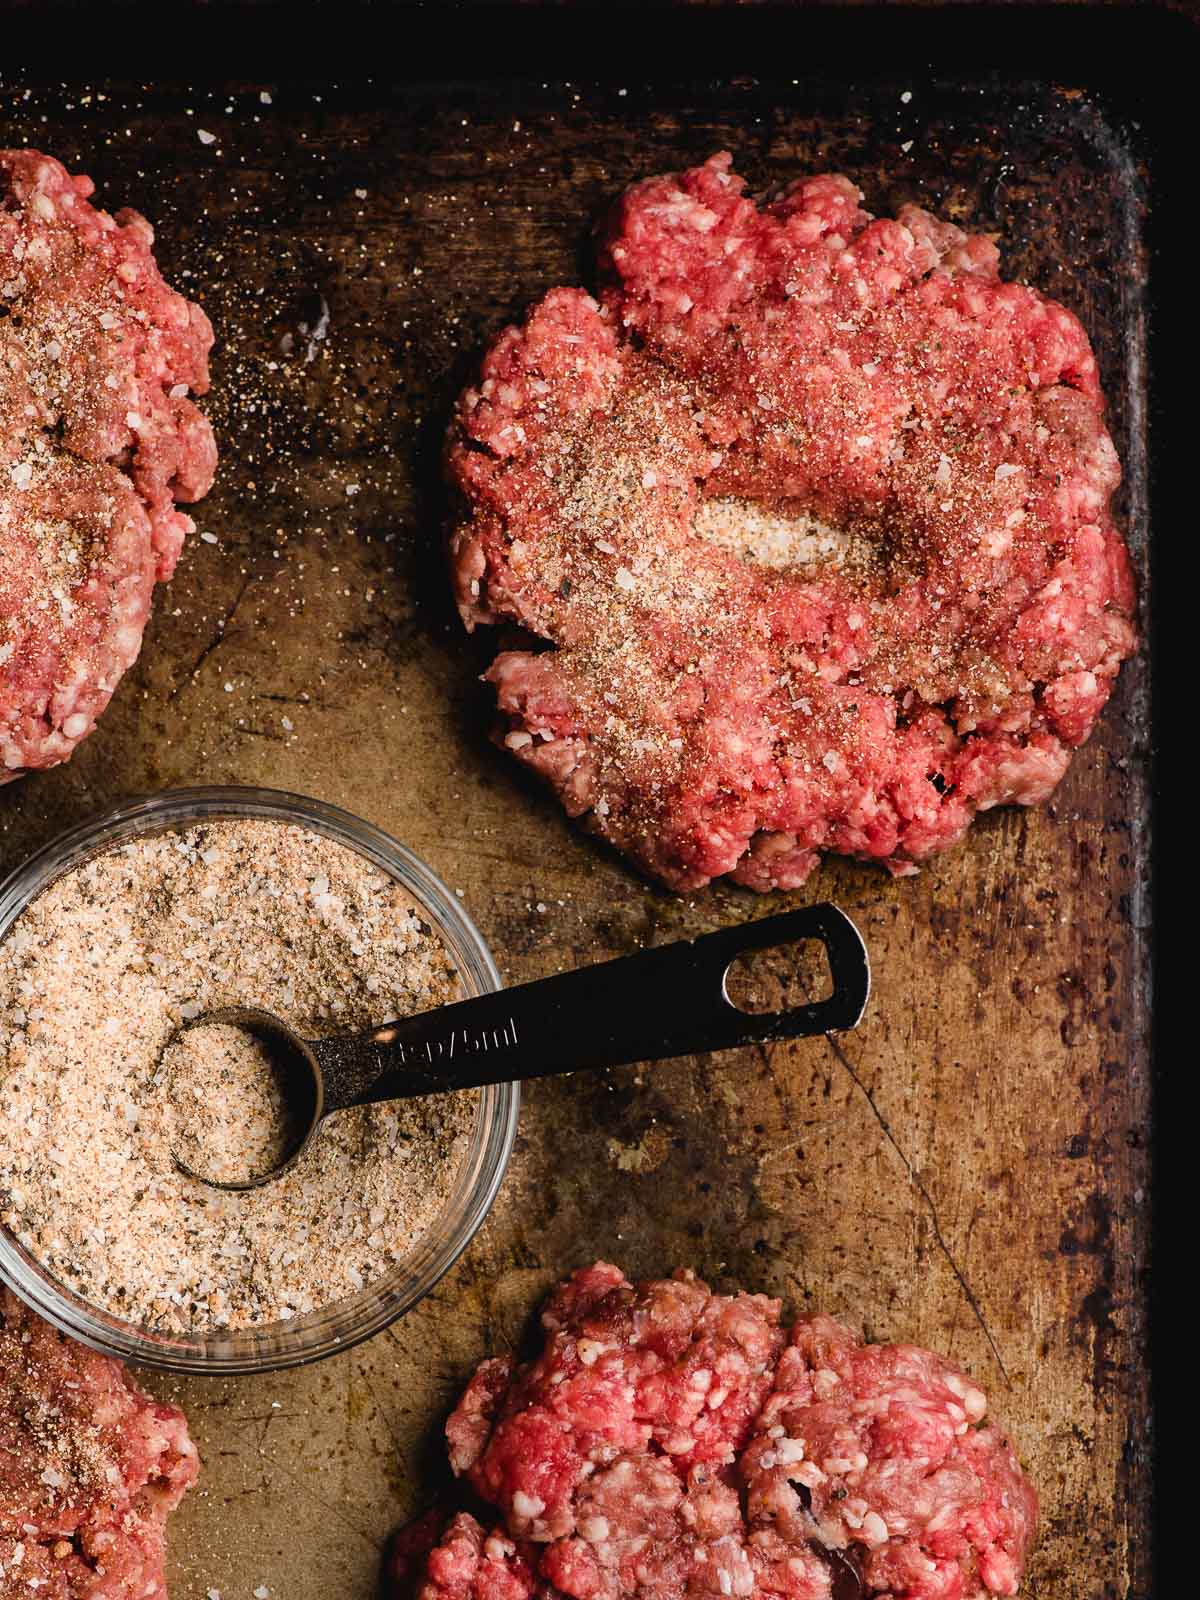 Raw burger patties sprinkled with seasoning on a sheet pan.